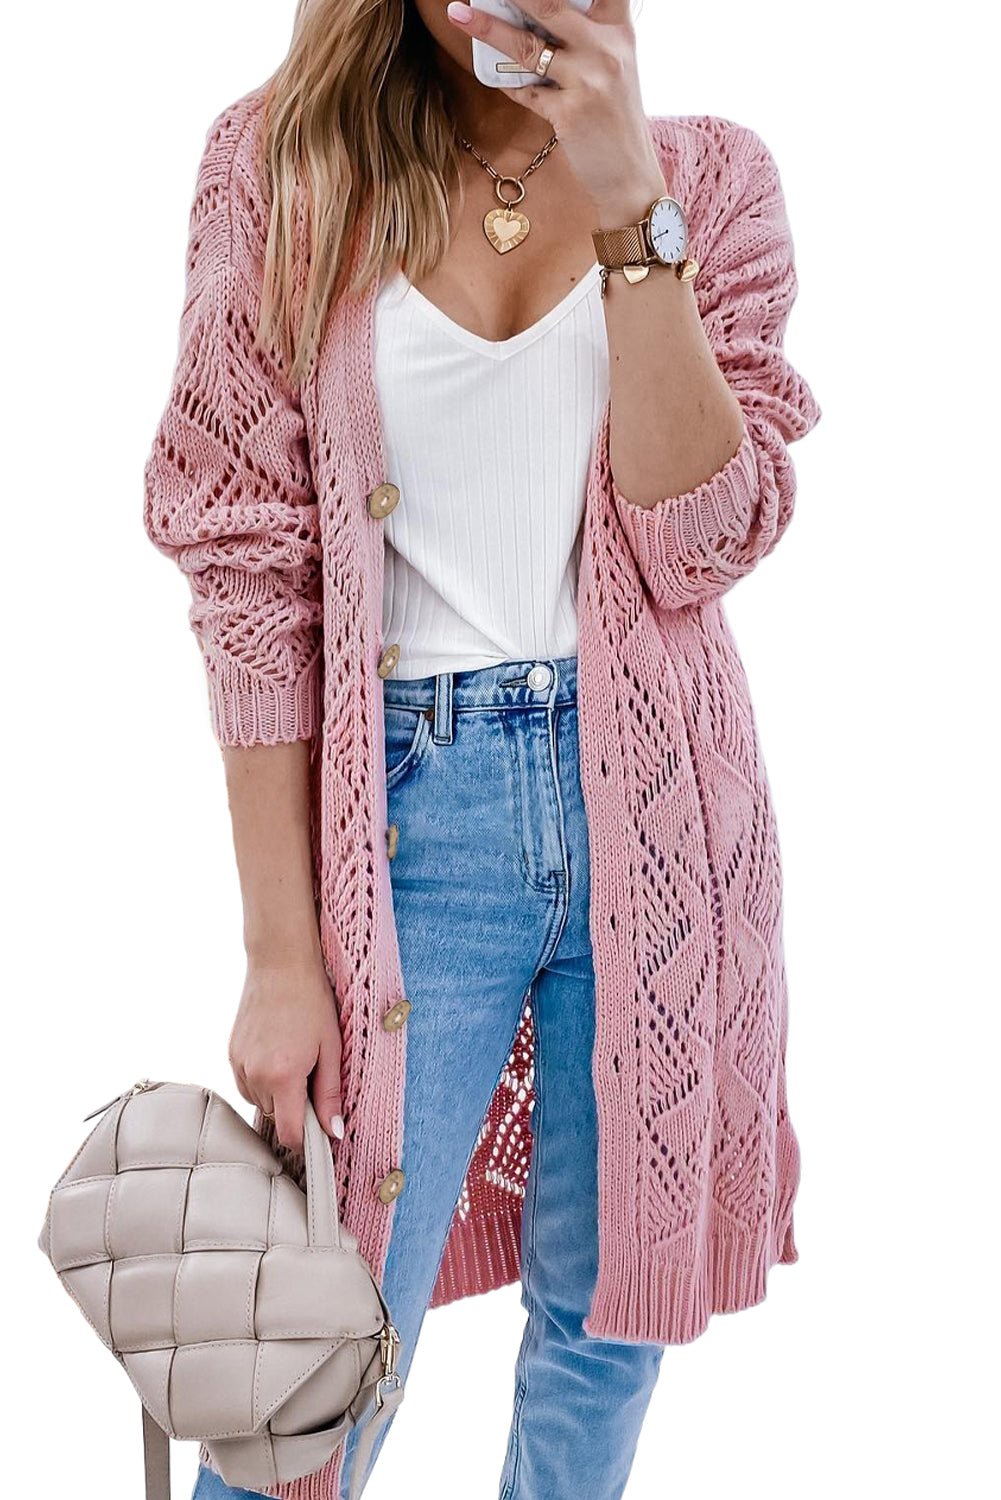 V-Neck Long Sleeve Cardigan - Fashion Girl Online Store